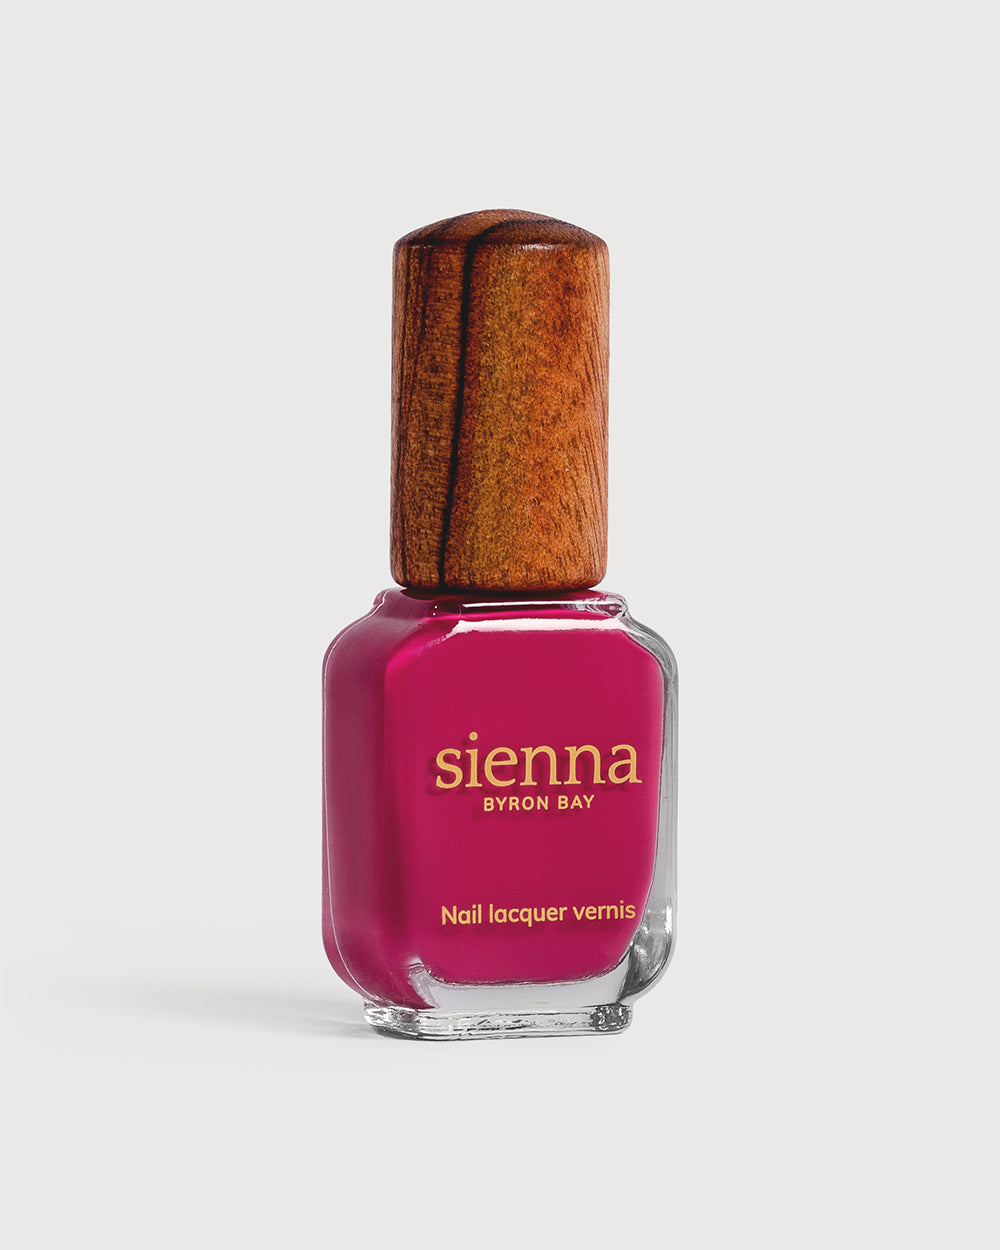 fushia pink nail polish bottle with timber cap